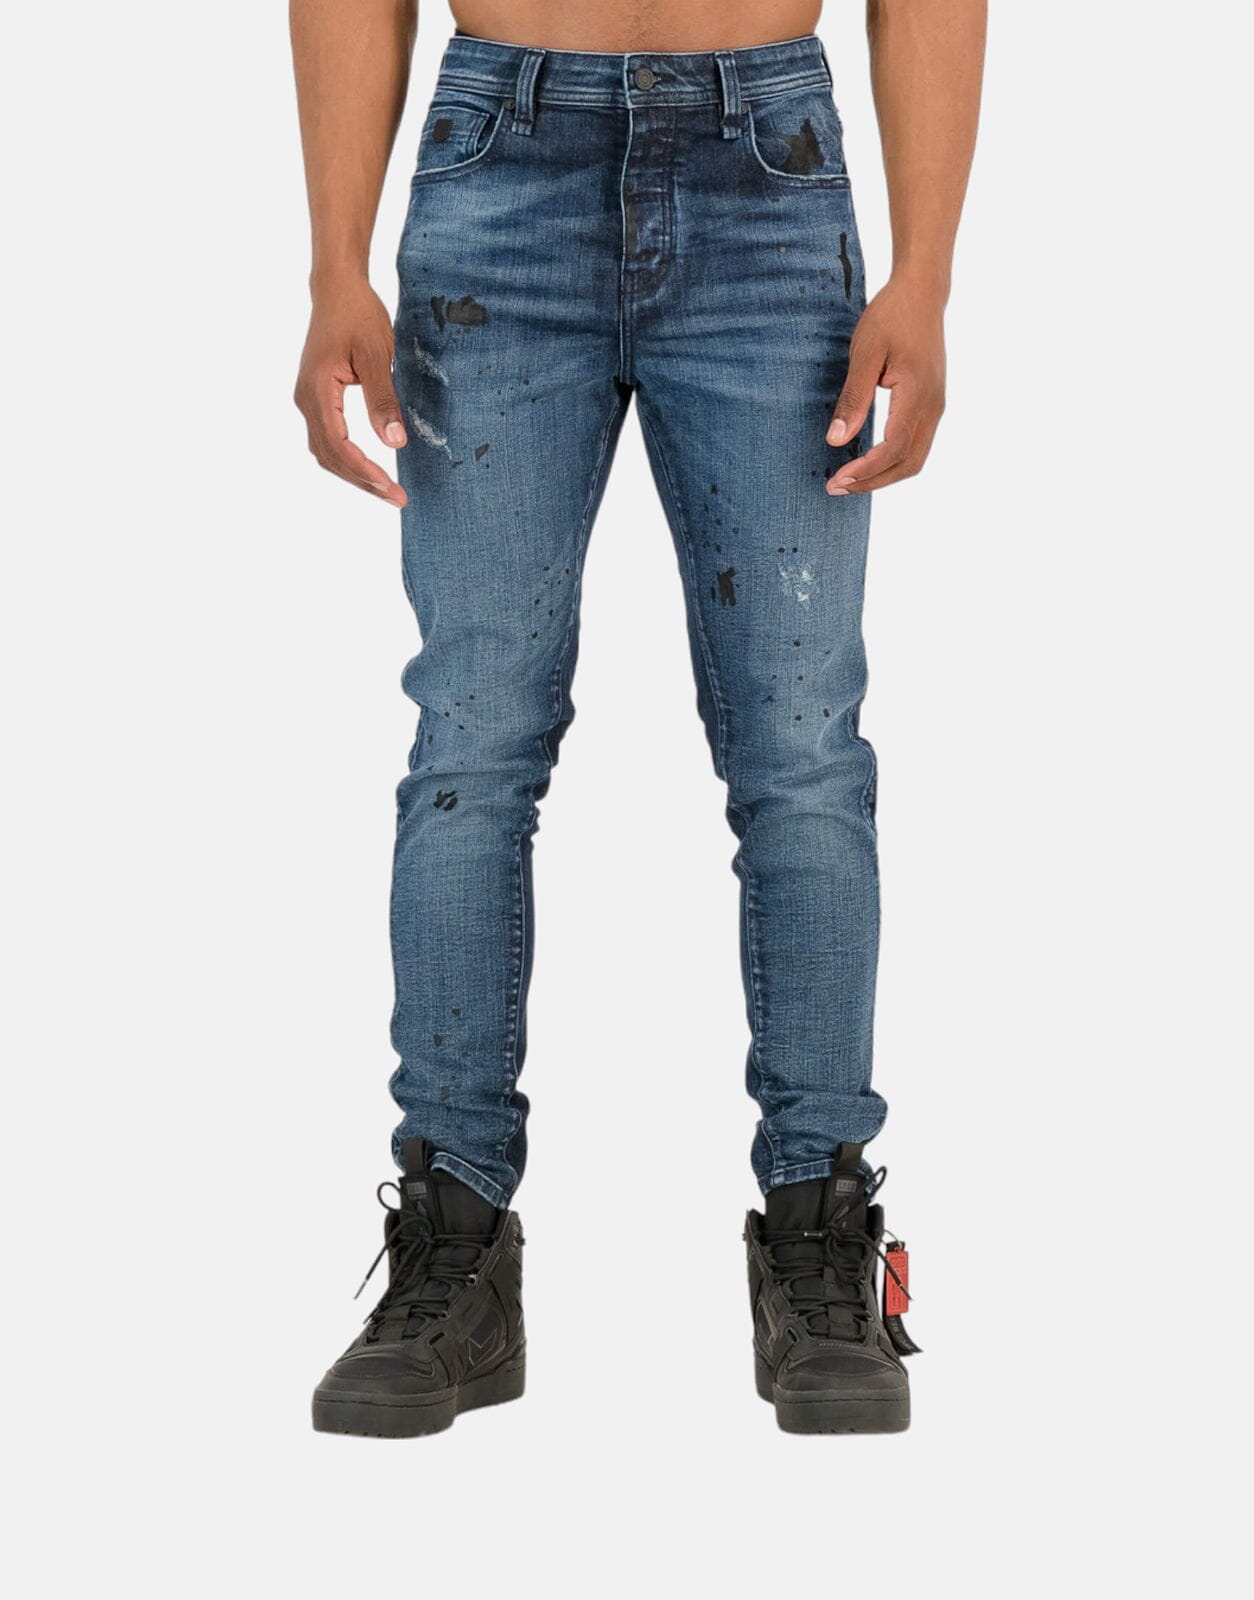 SPCC Cortana Indigo Jeans - Subwear